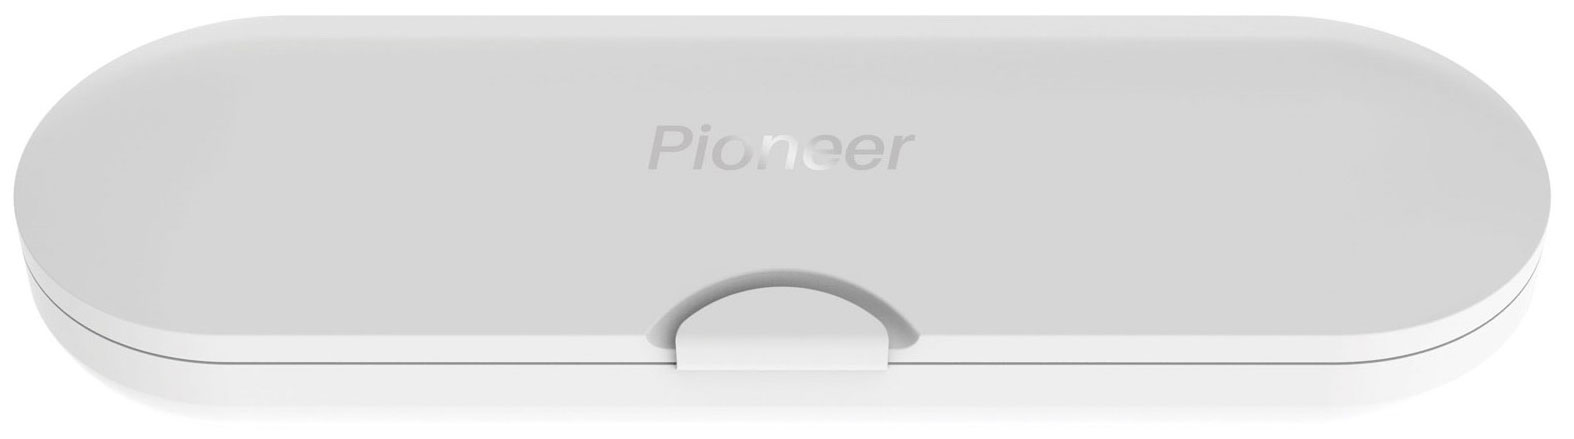 Зубная щетка Pioneer TB-5020 зубная щетка pioneer tb 1021 1 шт